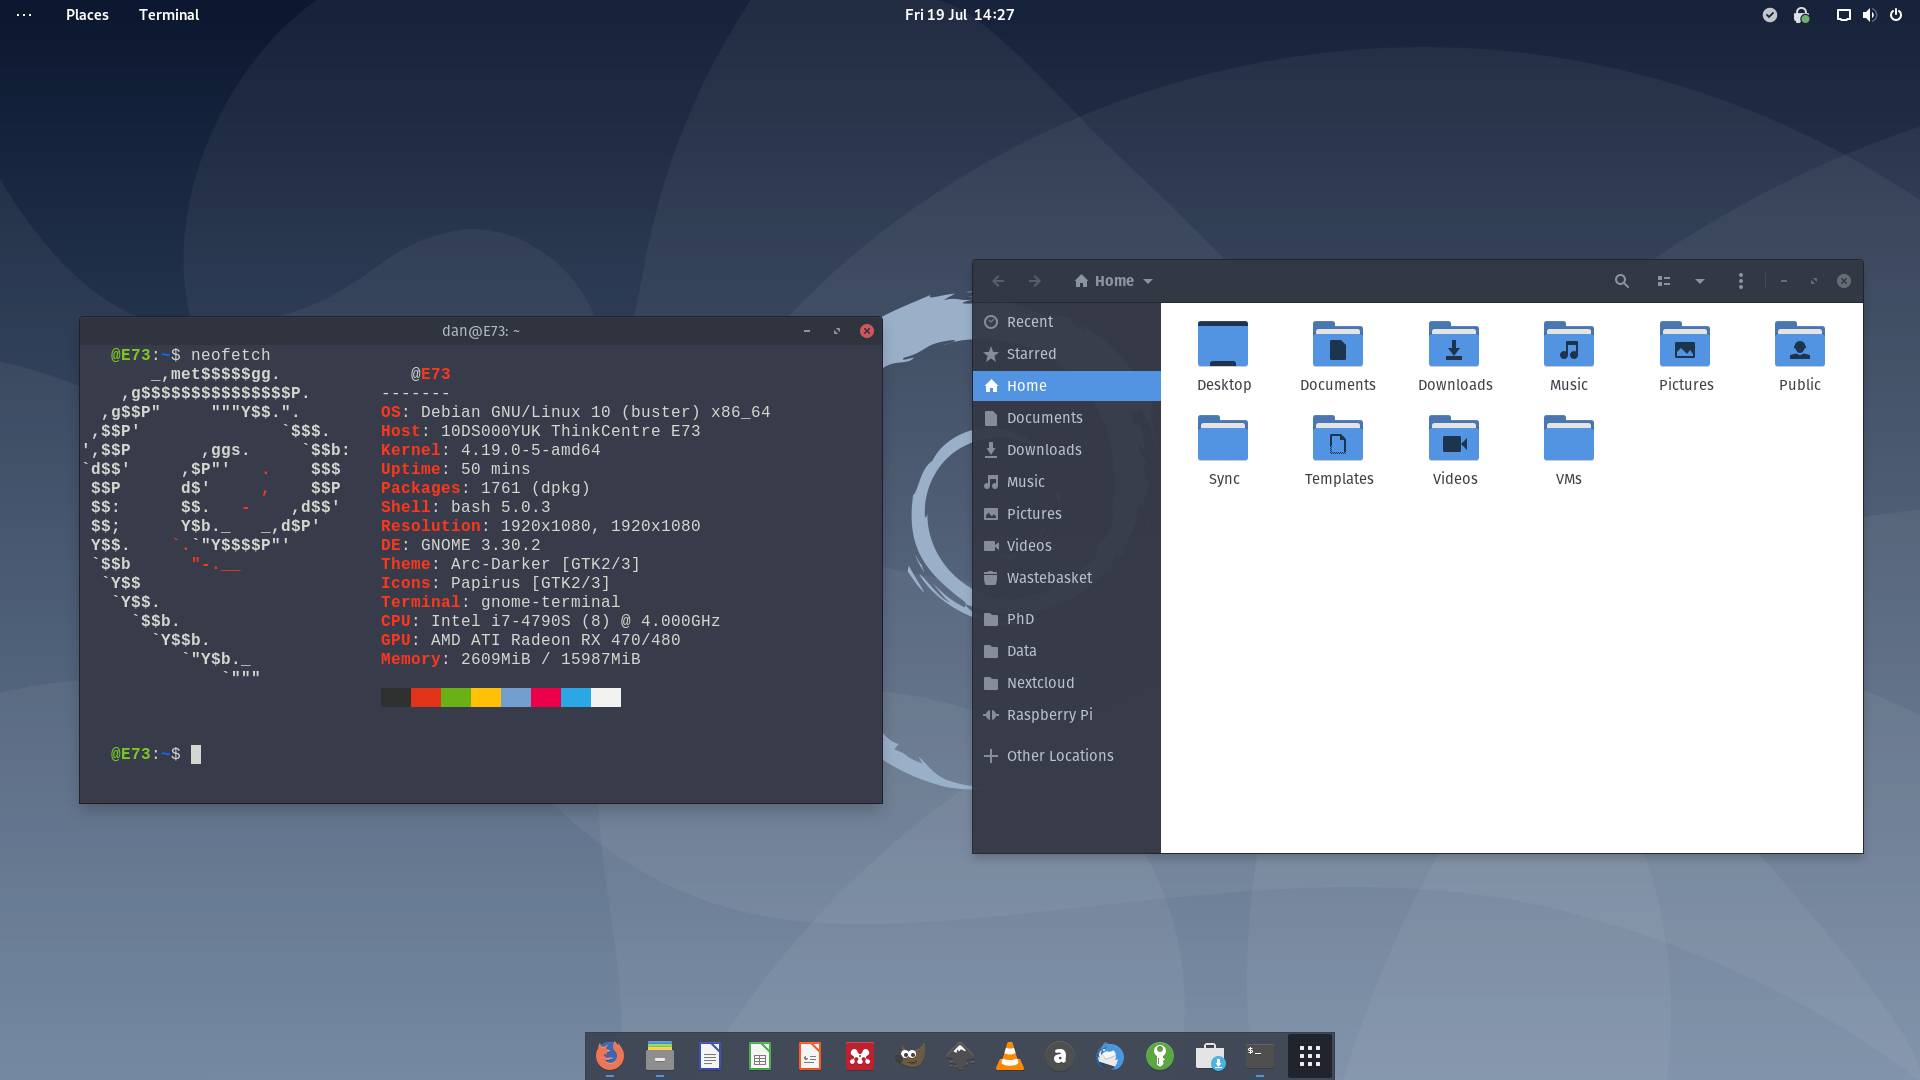 Pulpit systemu Linux Debian oparty na środowisku GNOME.